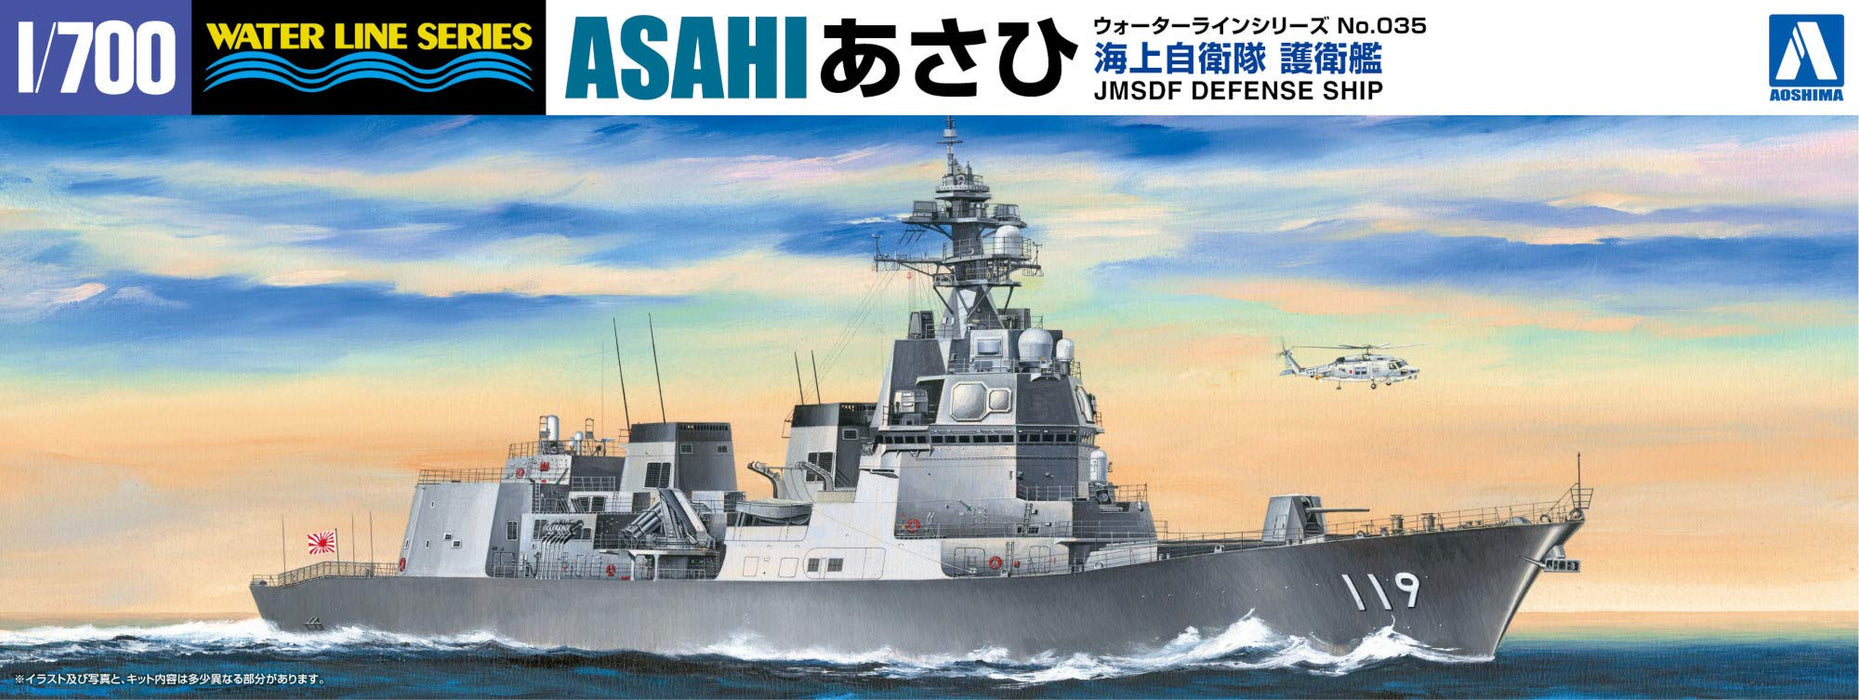 AOSHIMA Waterline 1/700 Jmsdf Defense Destroyer Asahi Dd-119 Plastic Model